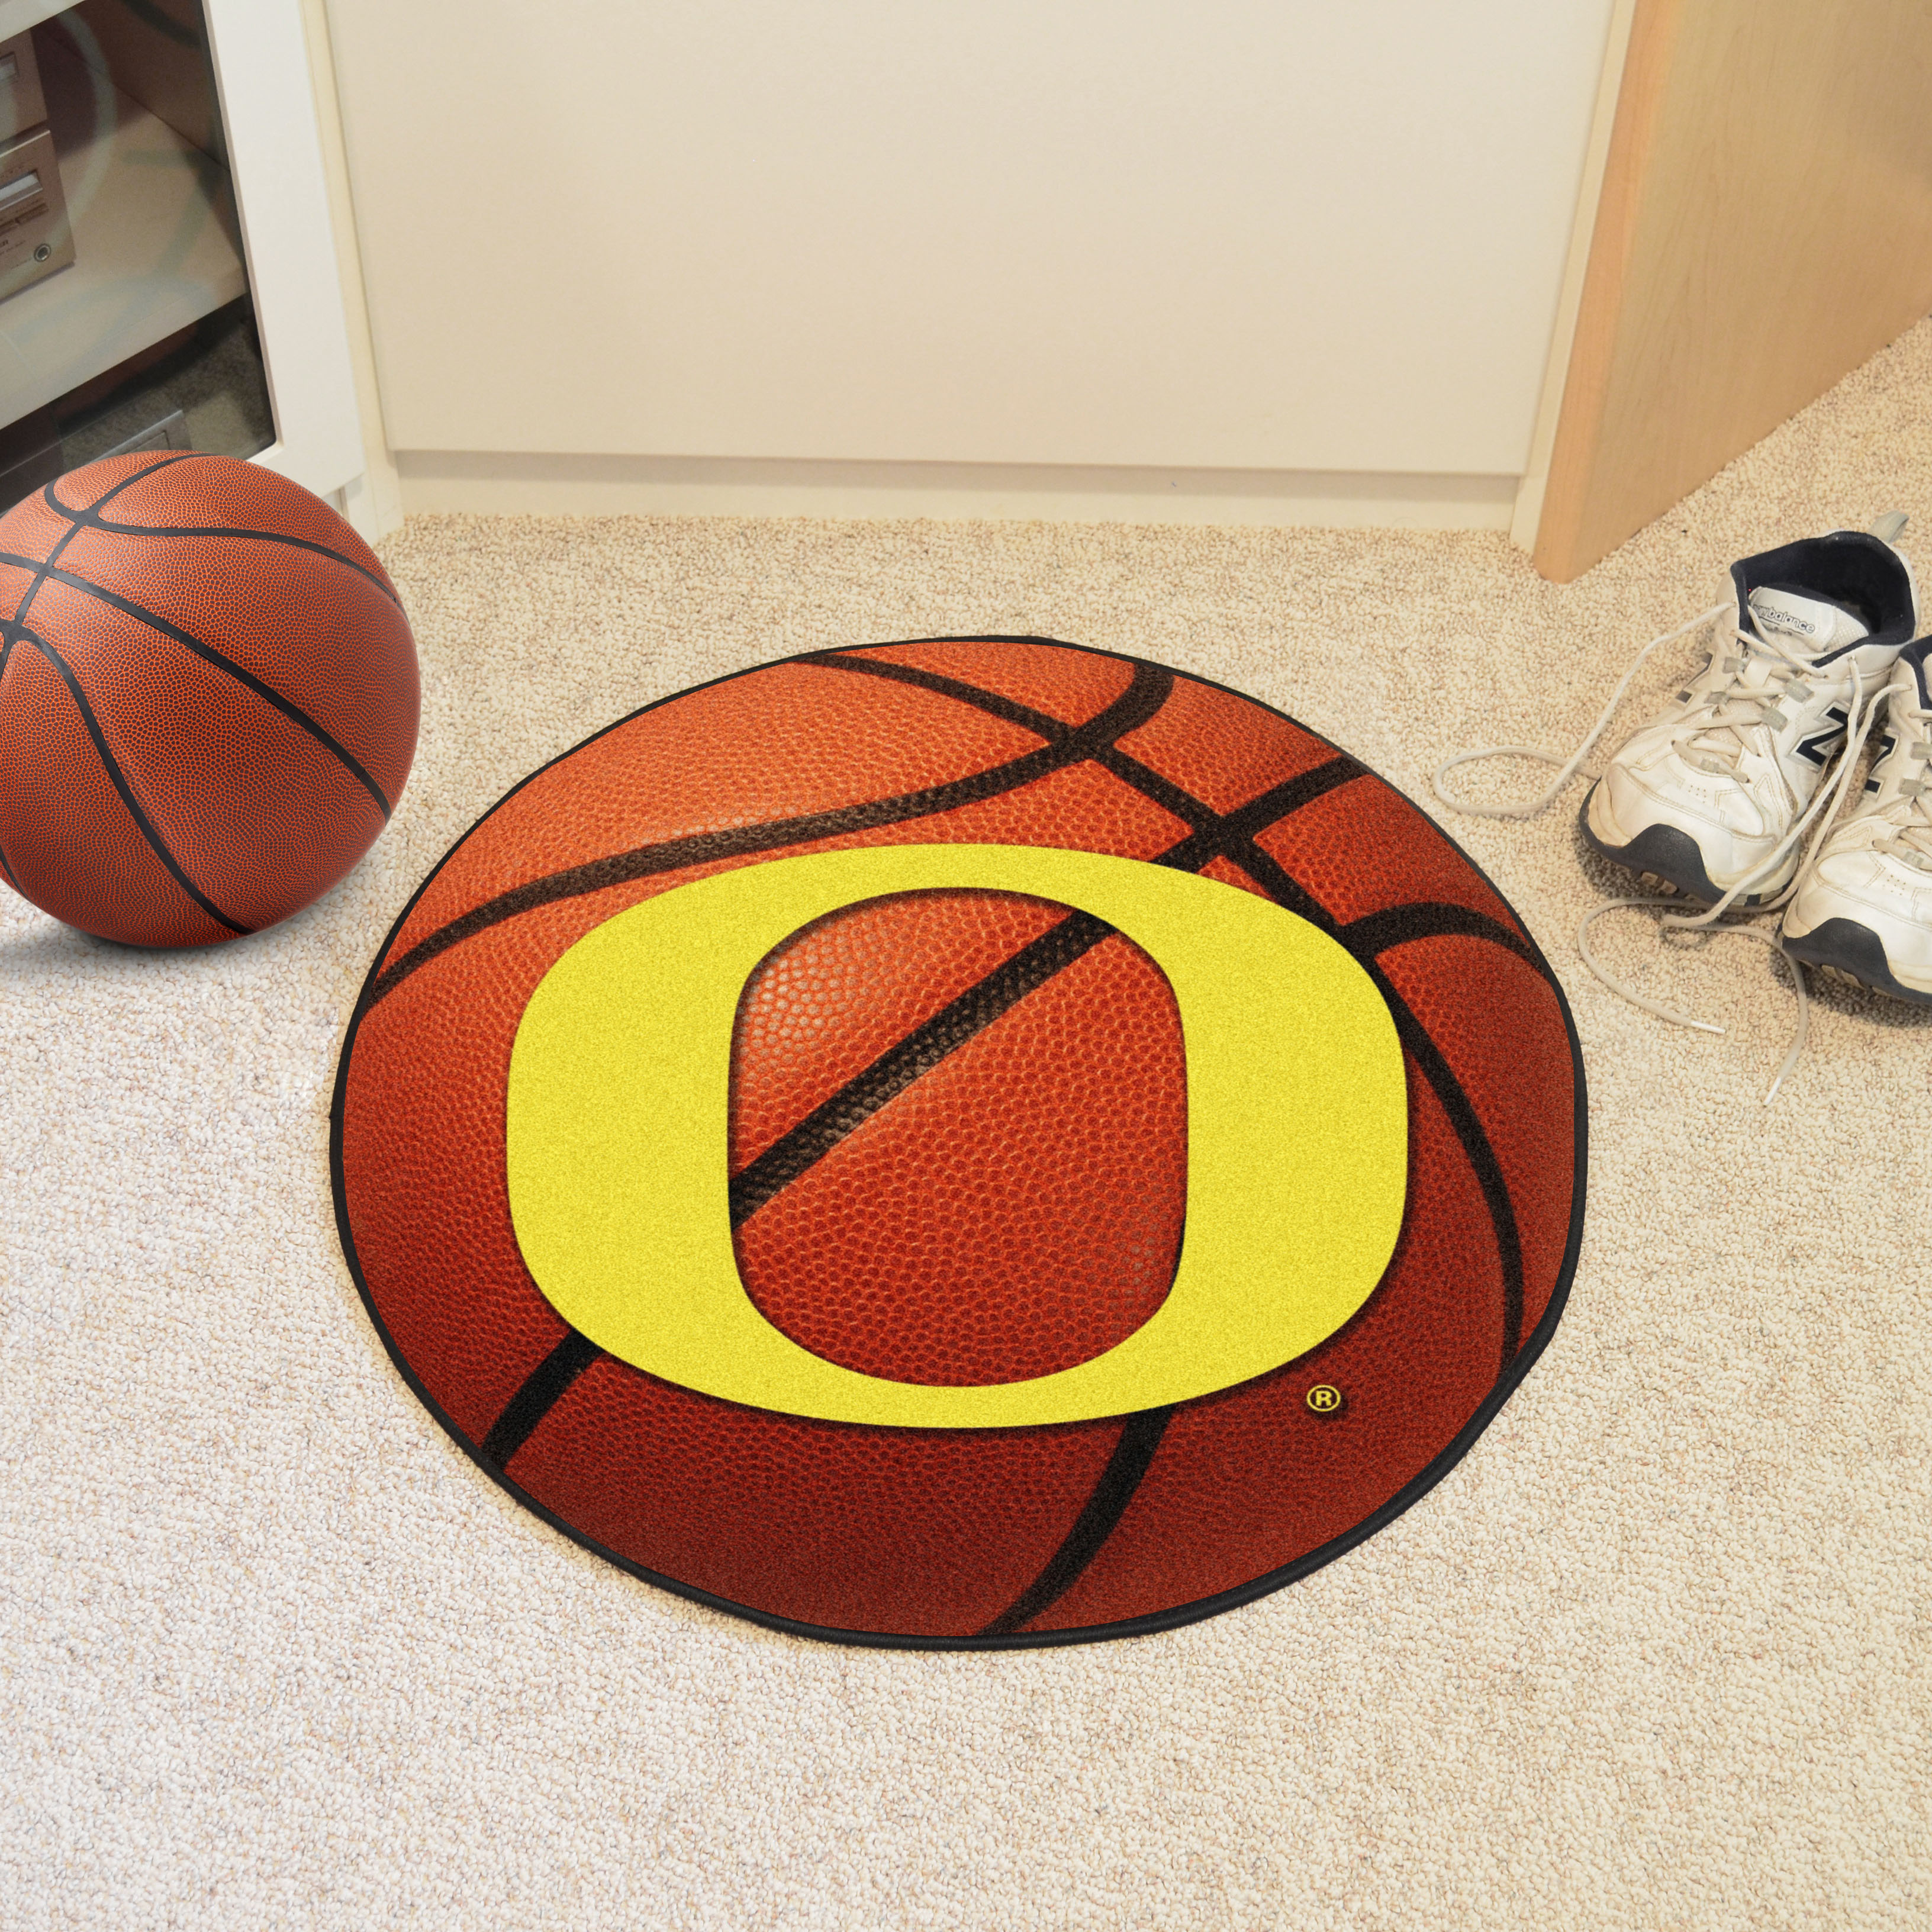 University of Oregon Ball Shaped Area Rugs (Ball Shaped Area Rugs: Basketball)